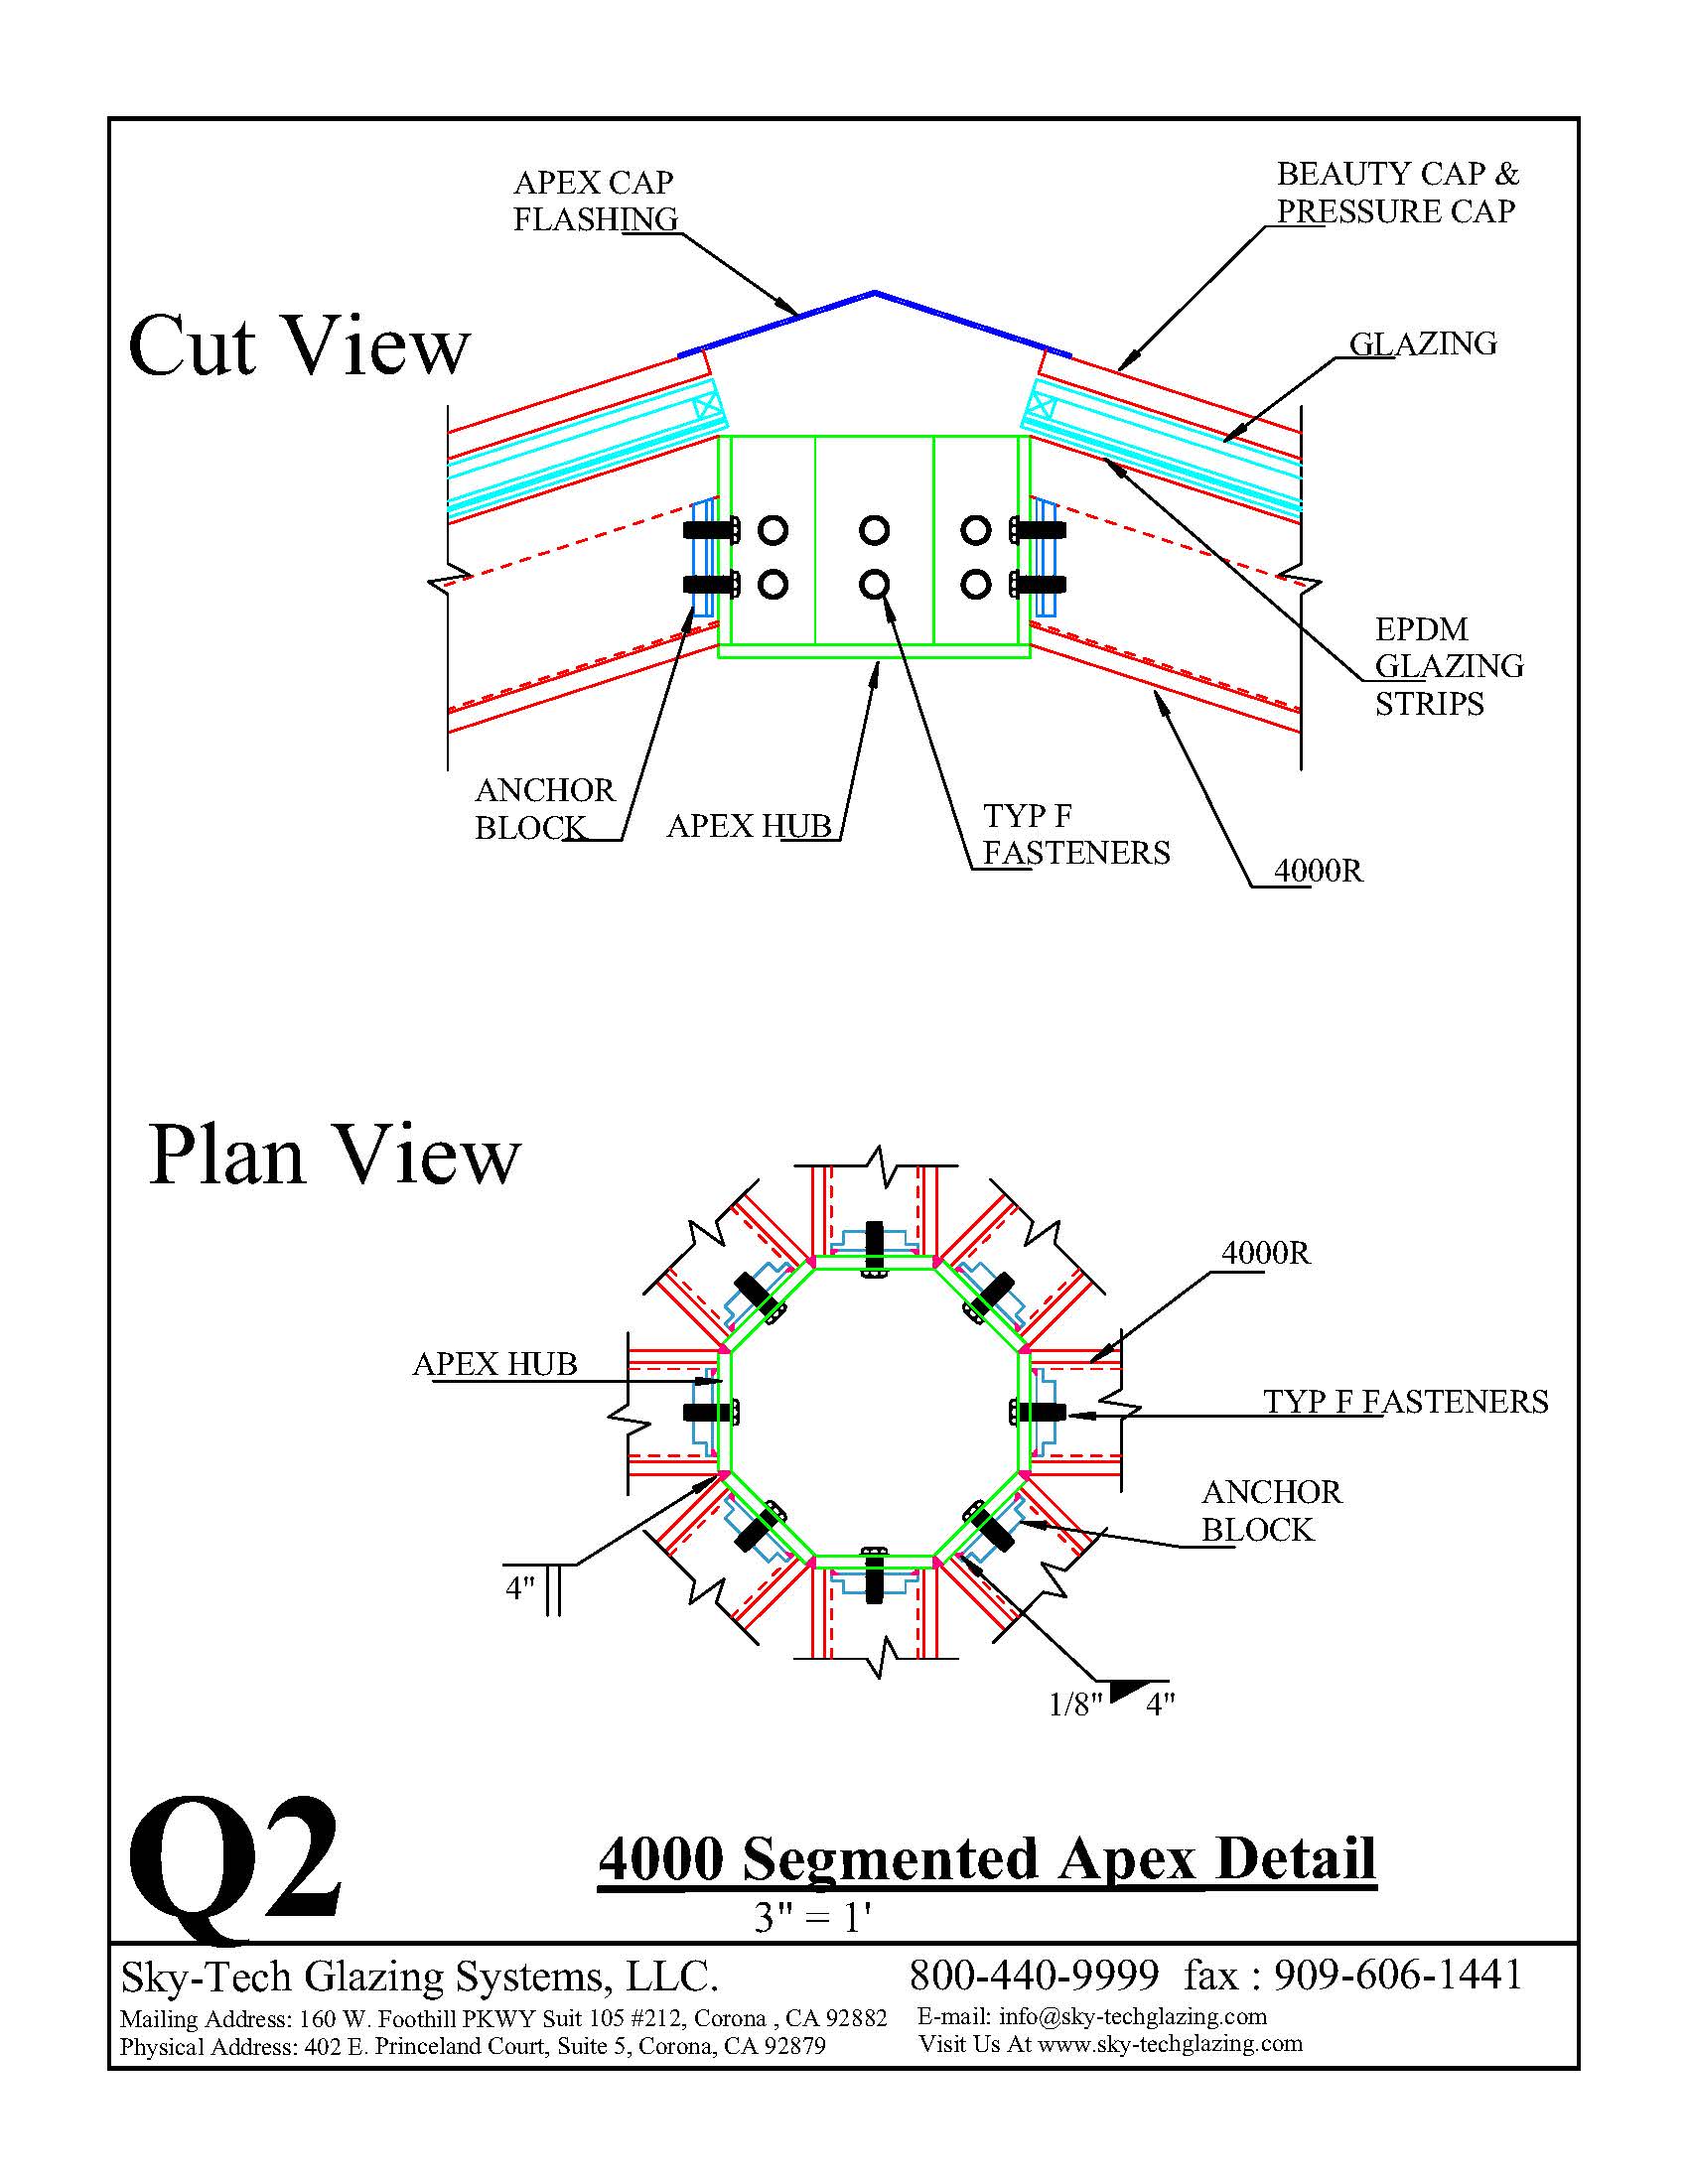 Q2 4000 Segmented Apex Detail